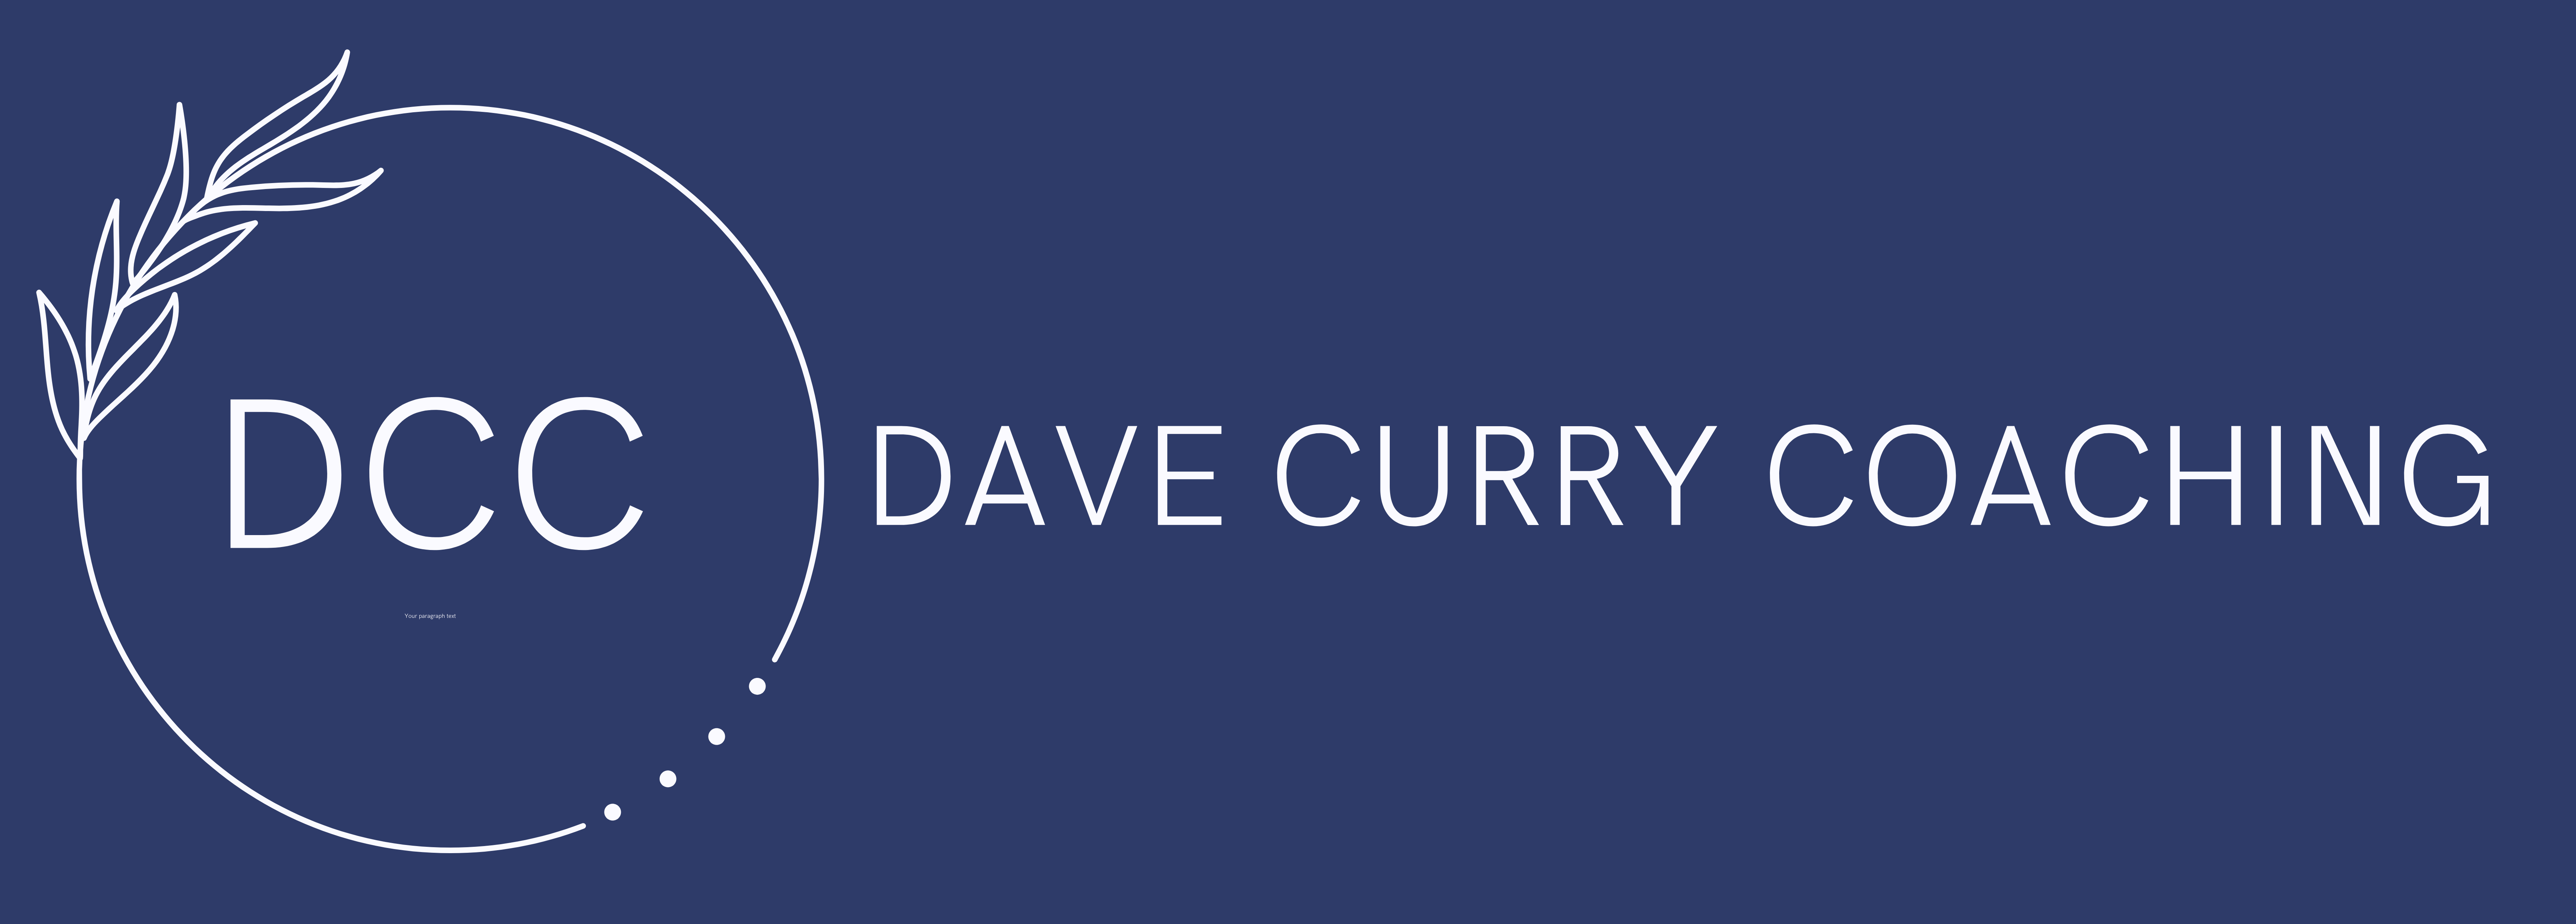 Dave Curry Coaching